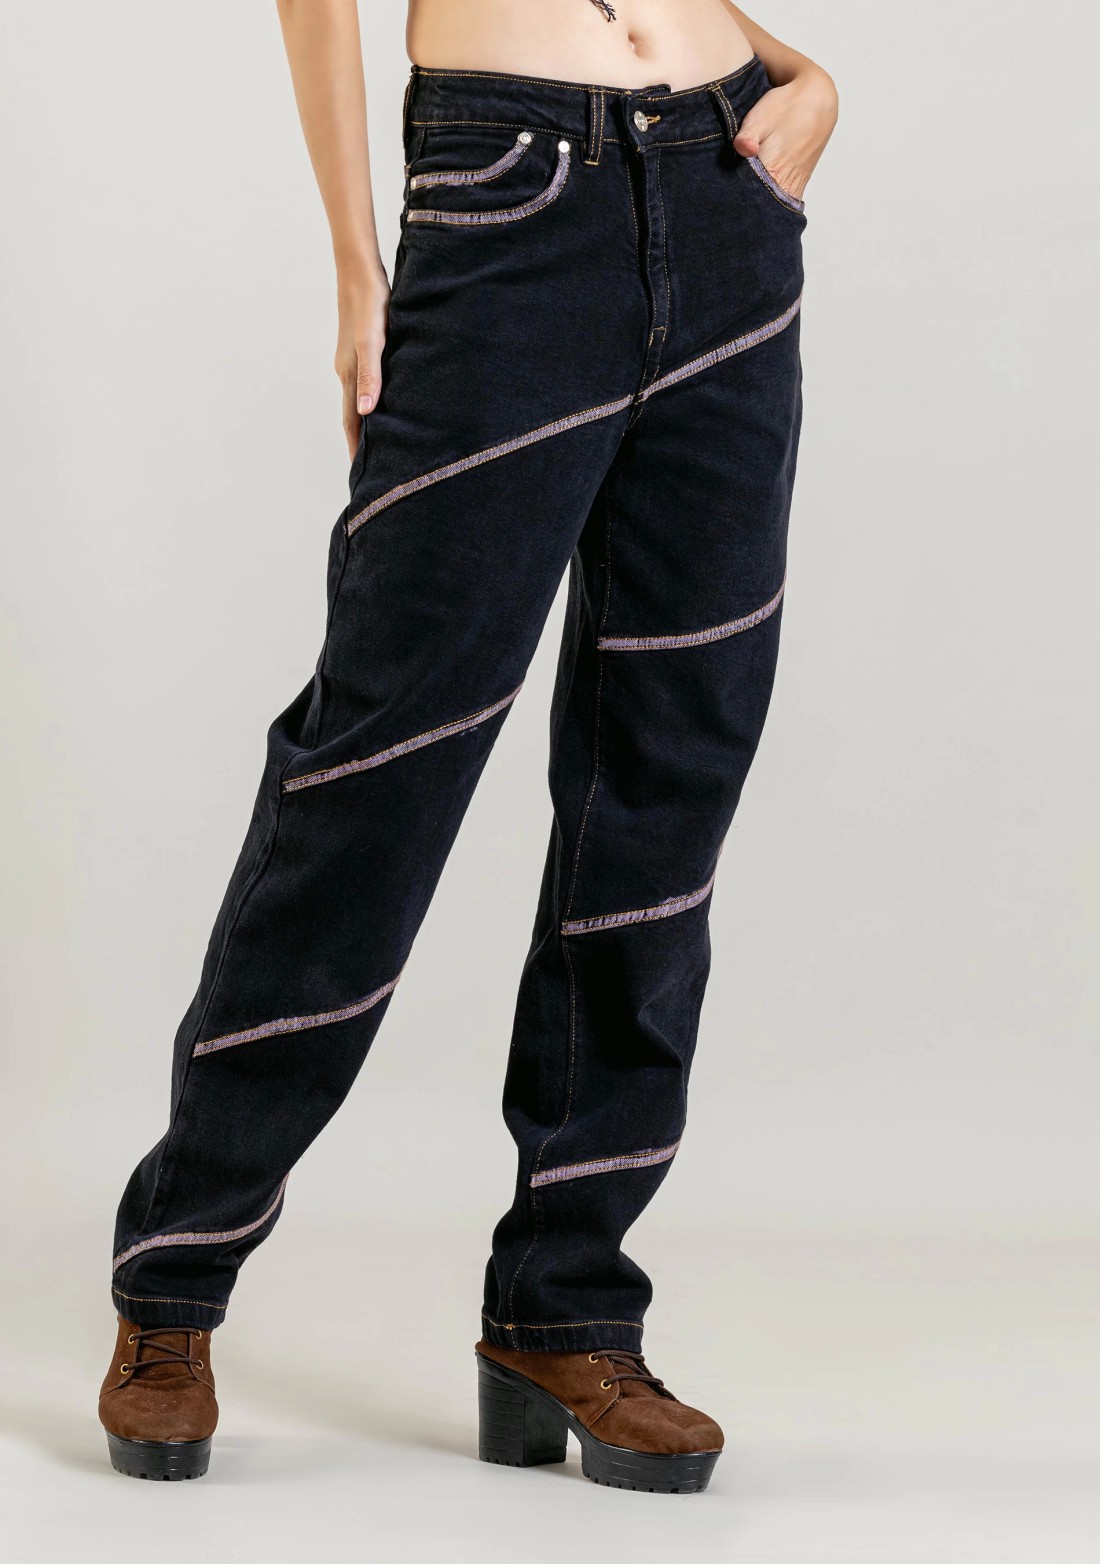 Black Straight Fit Women's Fashion jeans